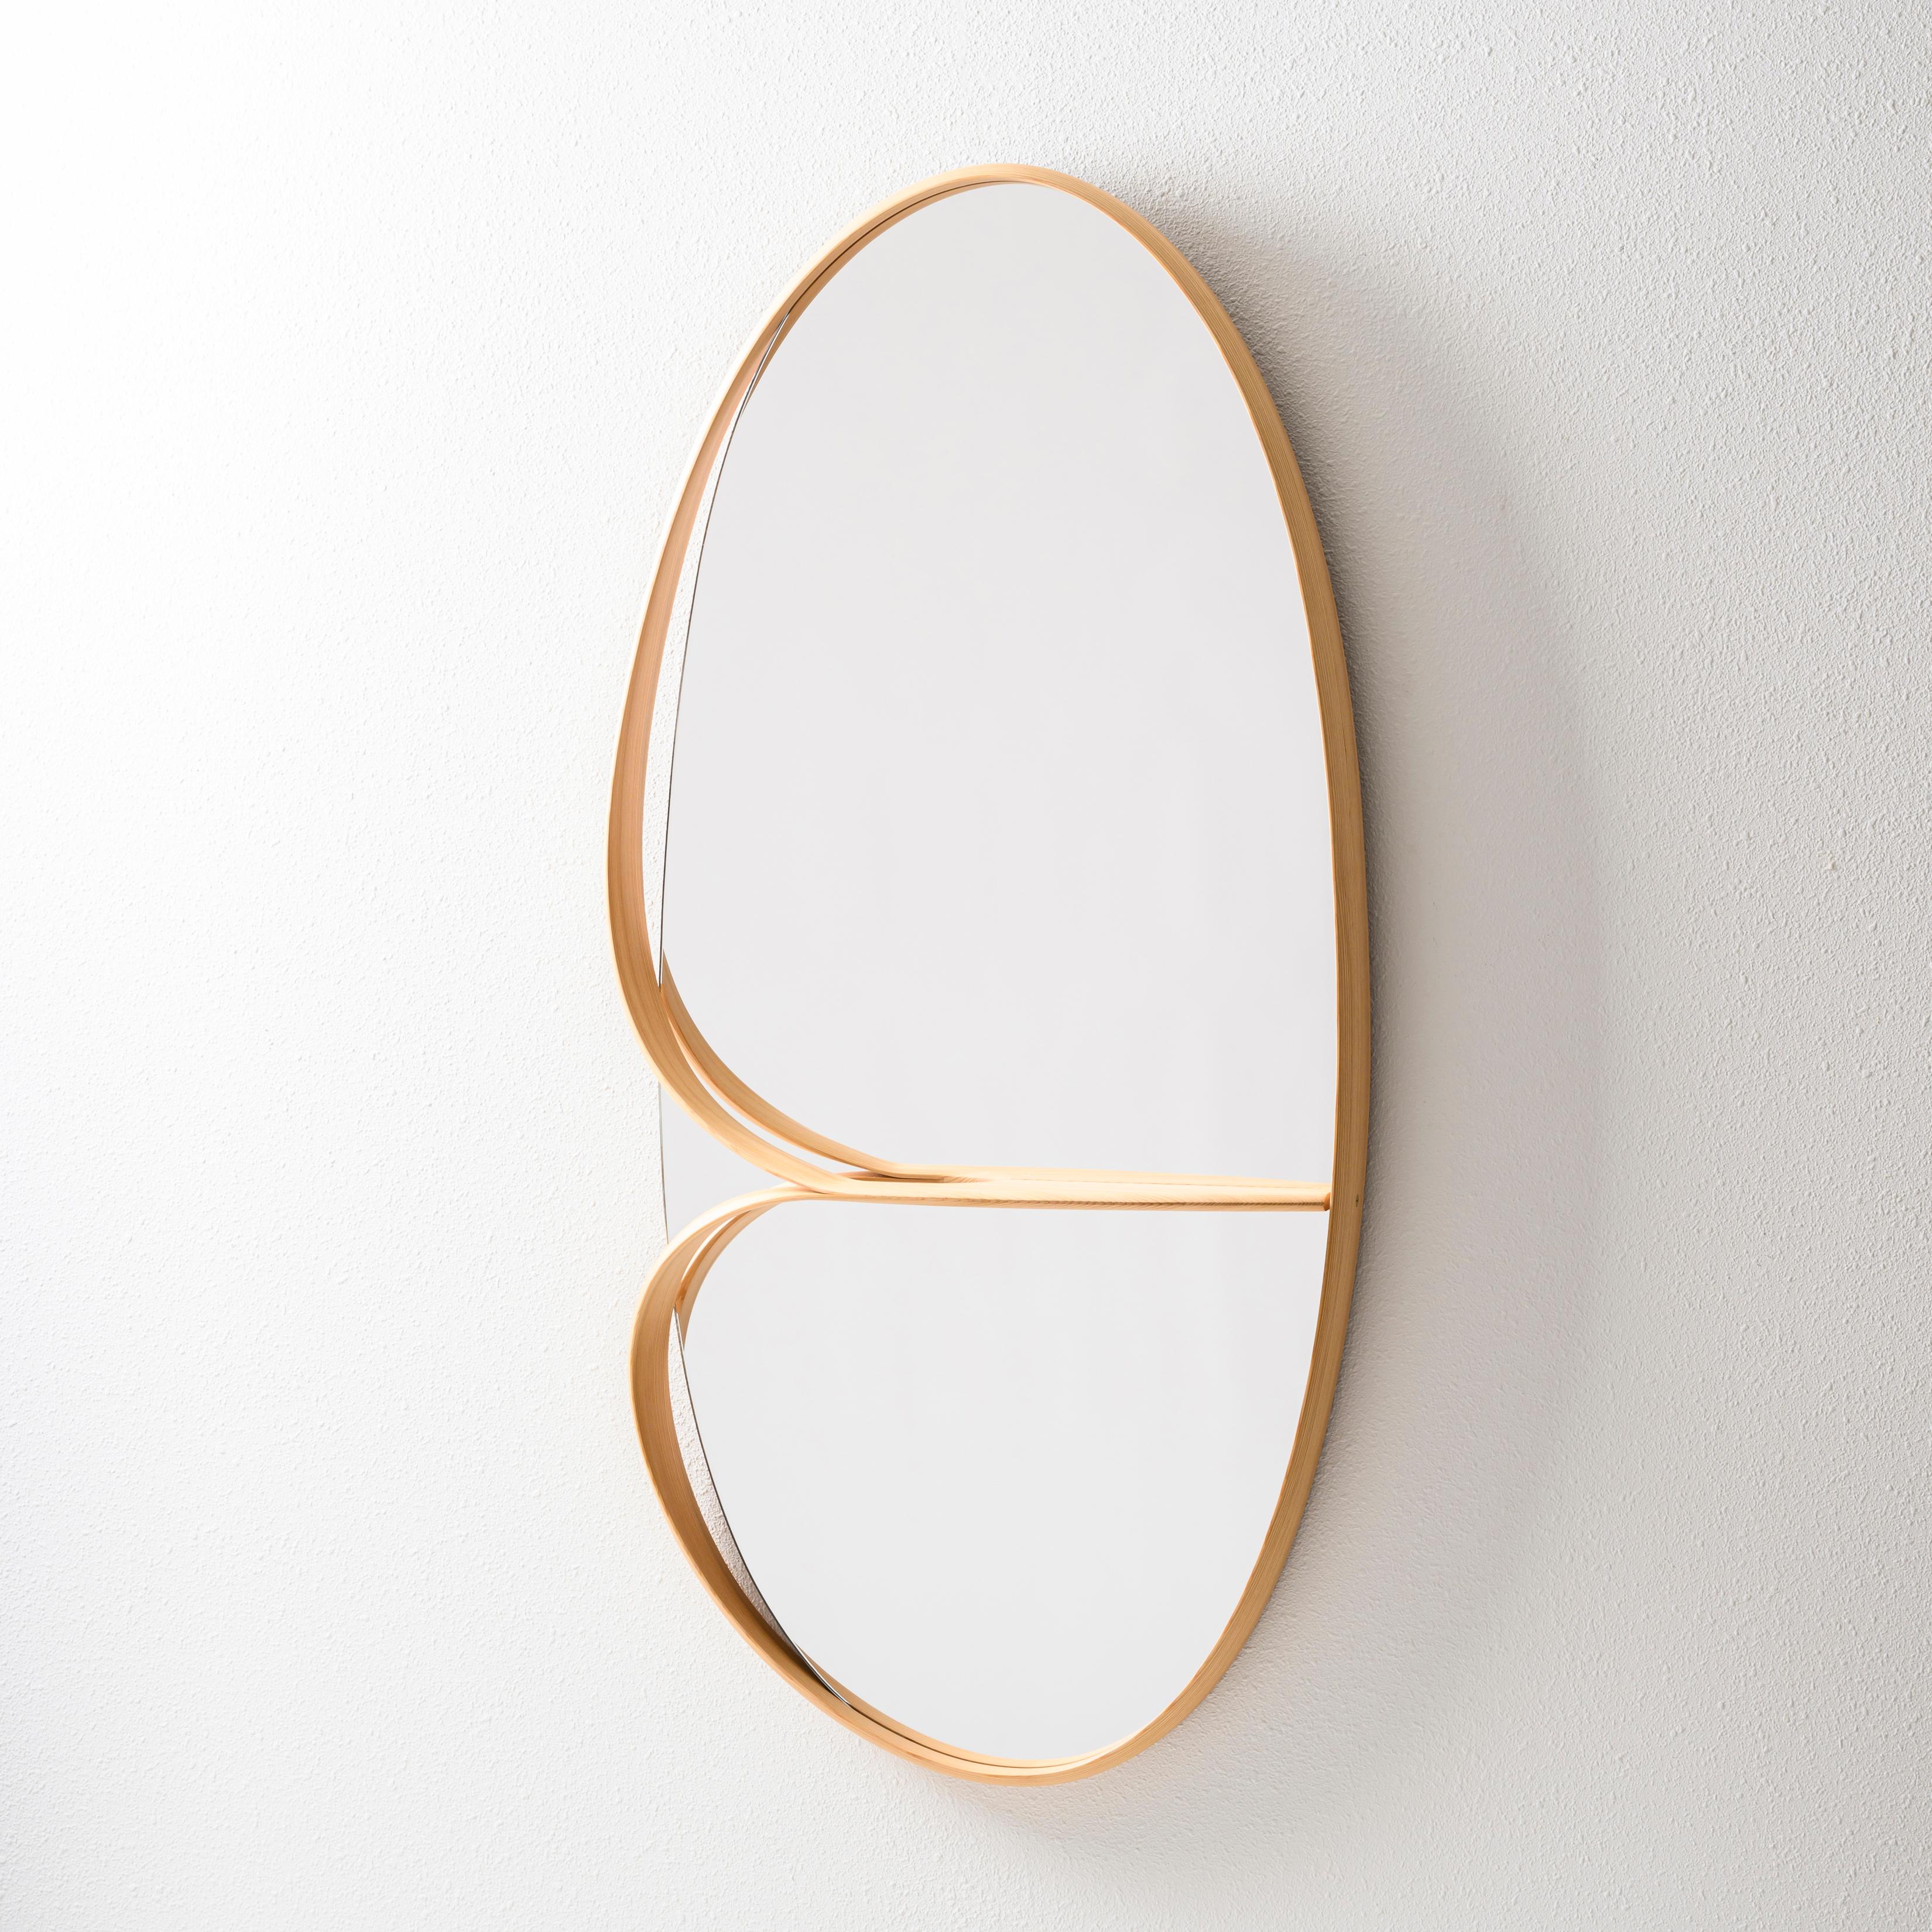 Muji wall mirror. 
Kenta Hirai created it with the technique 